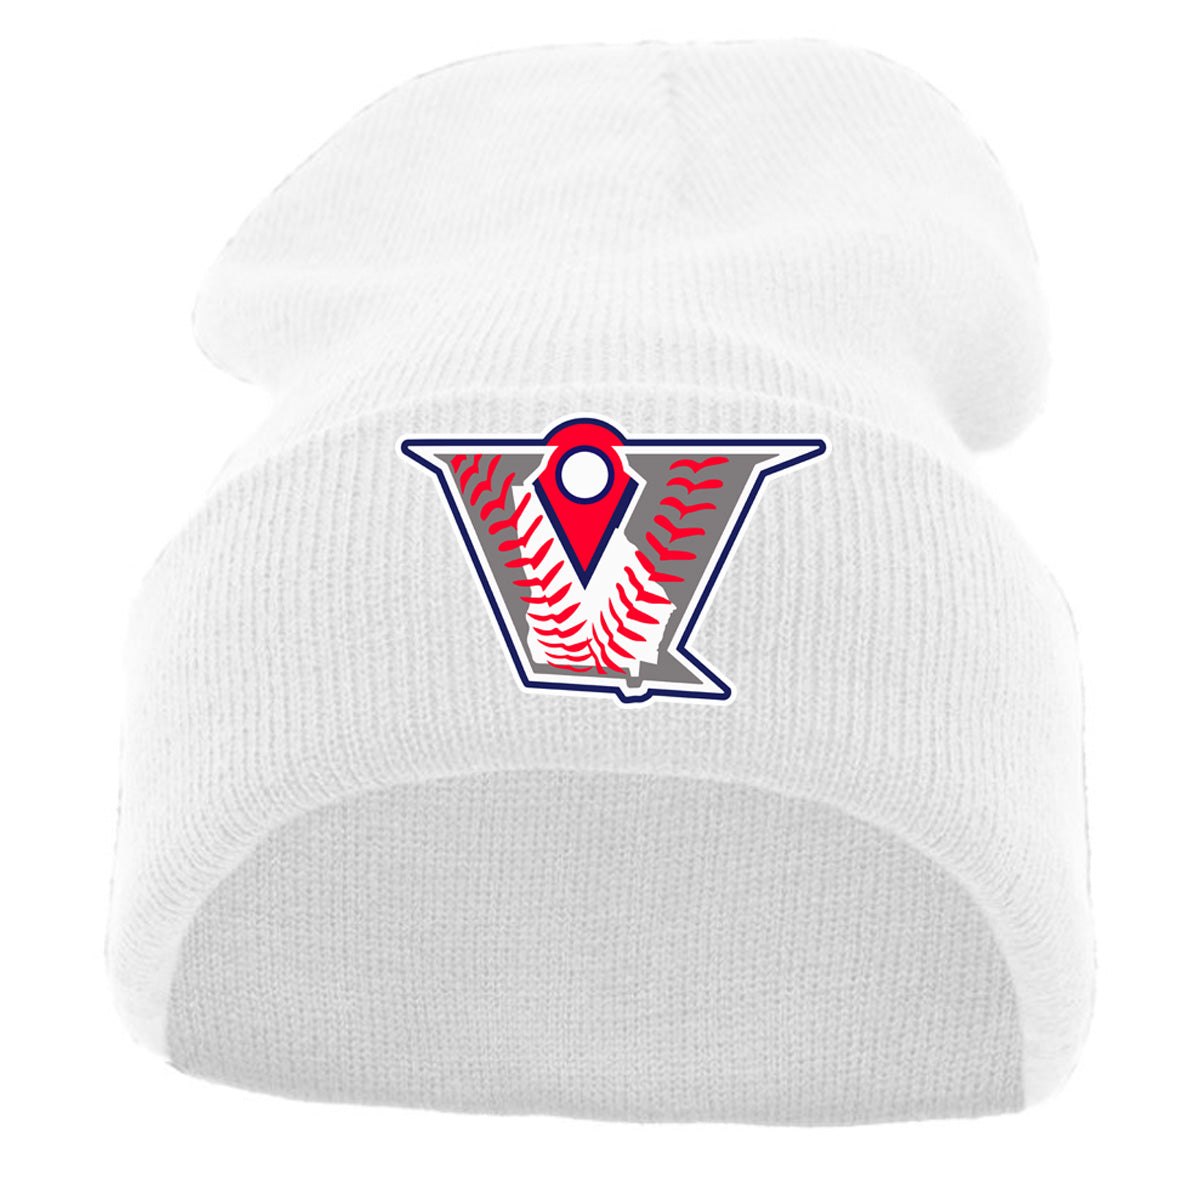 Velo BB - KNIT FOLD OVER BEANIE with Velocity Baseball Logo - White (621K) - Southern Grace Creations